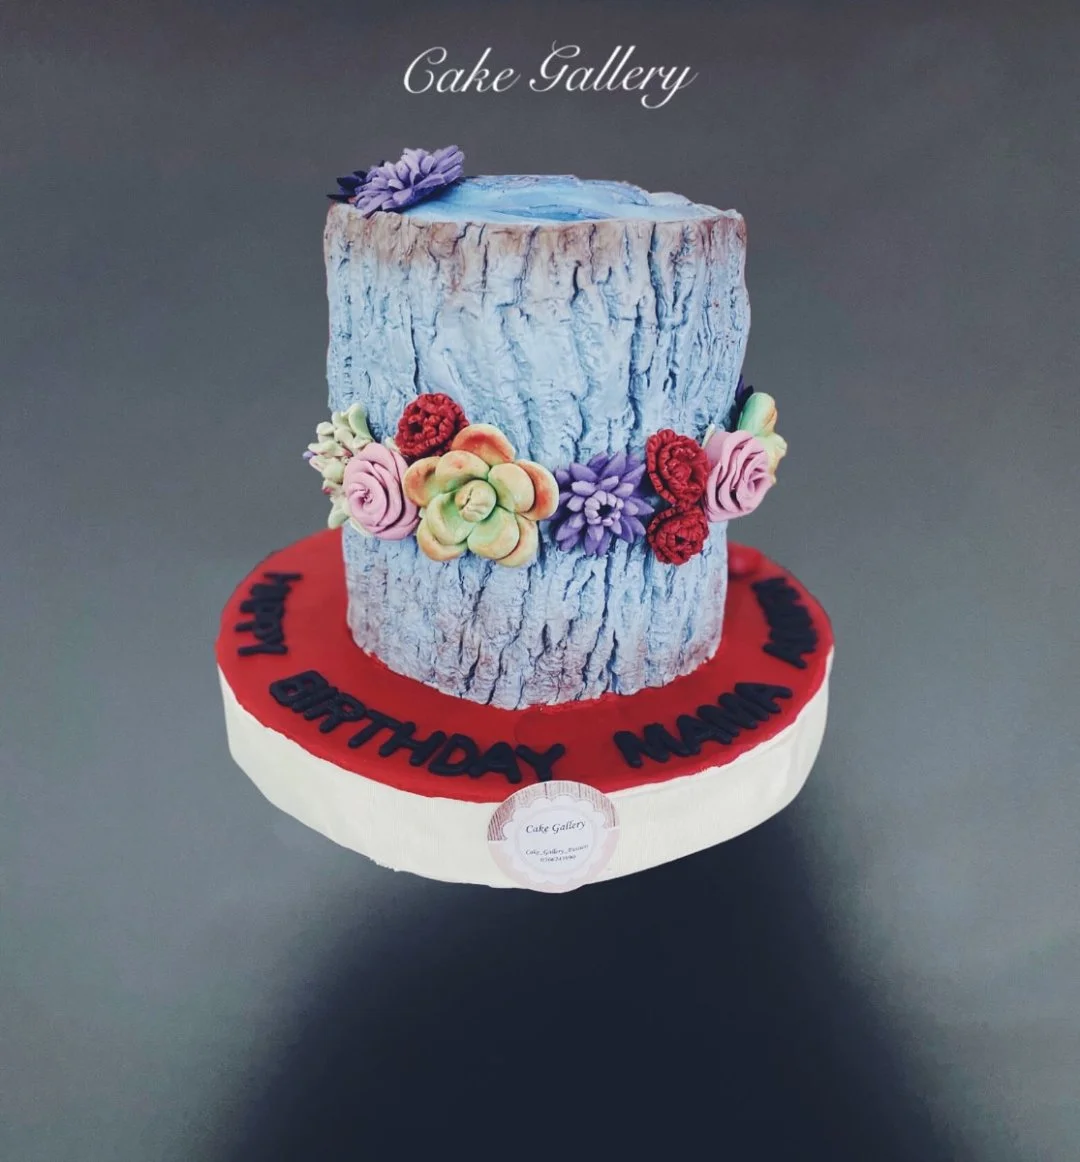 Tree Trunck Cake by Cake Gallery